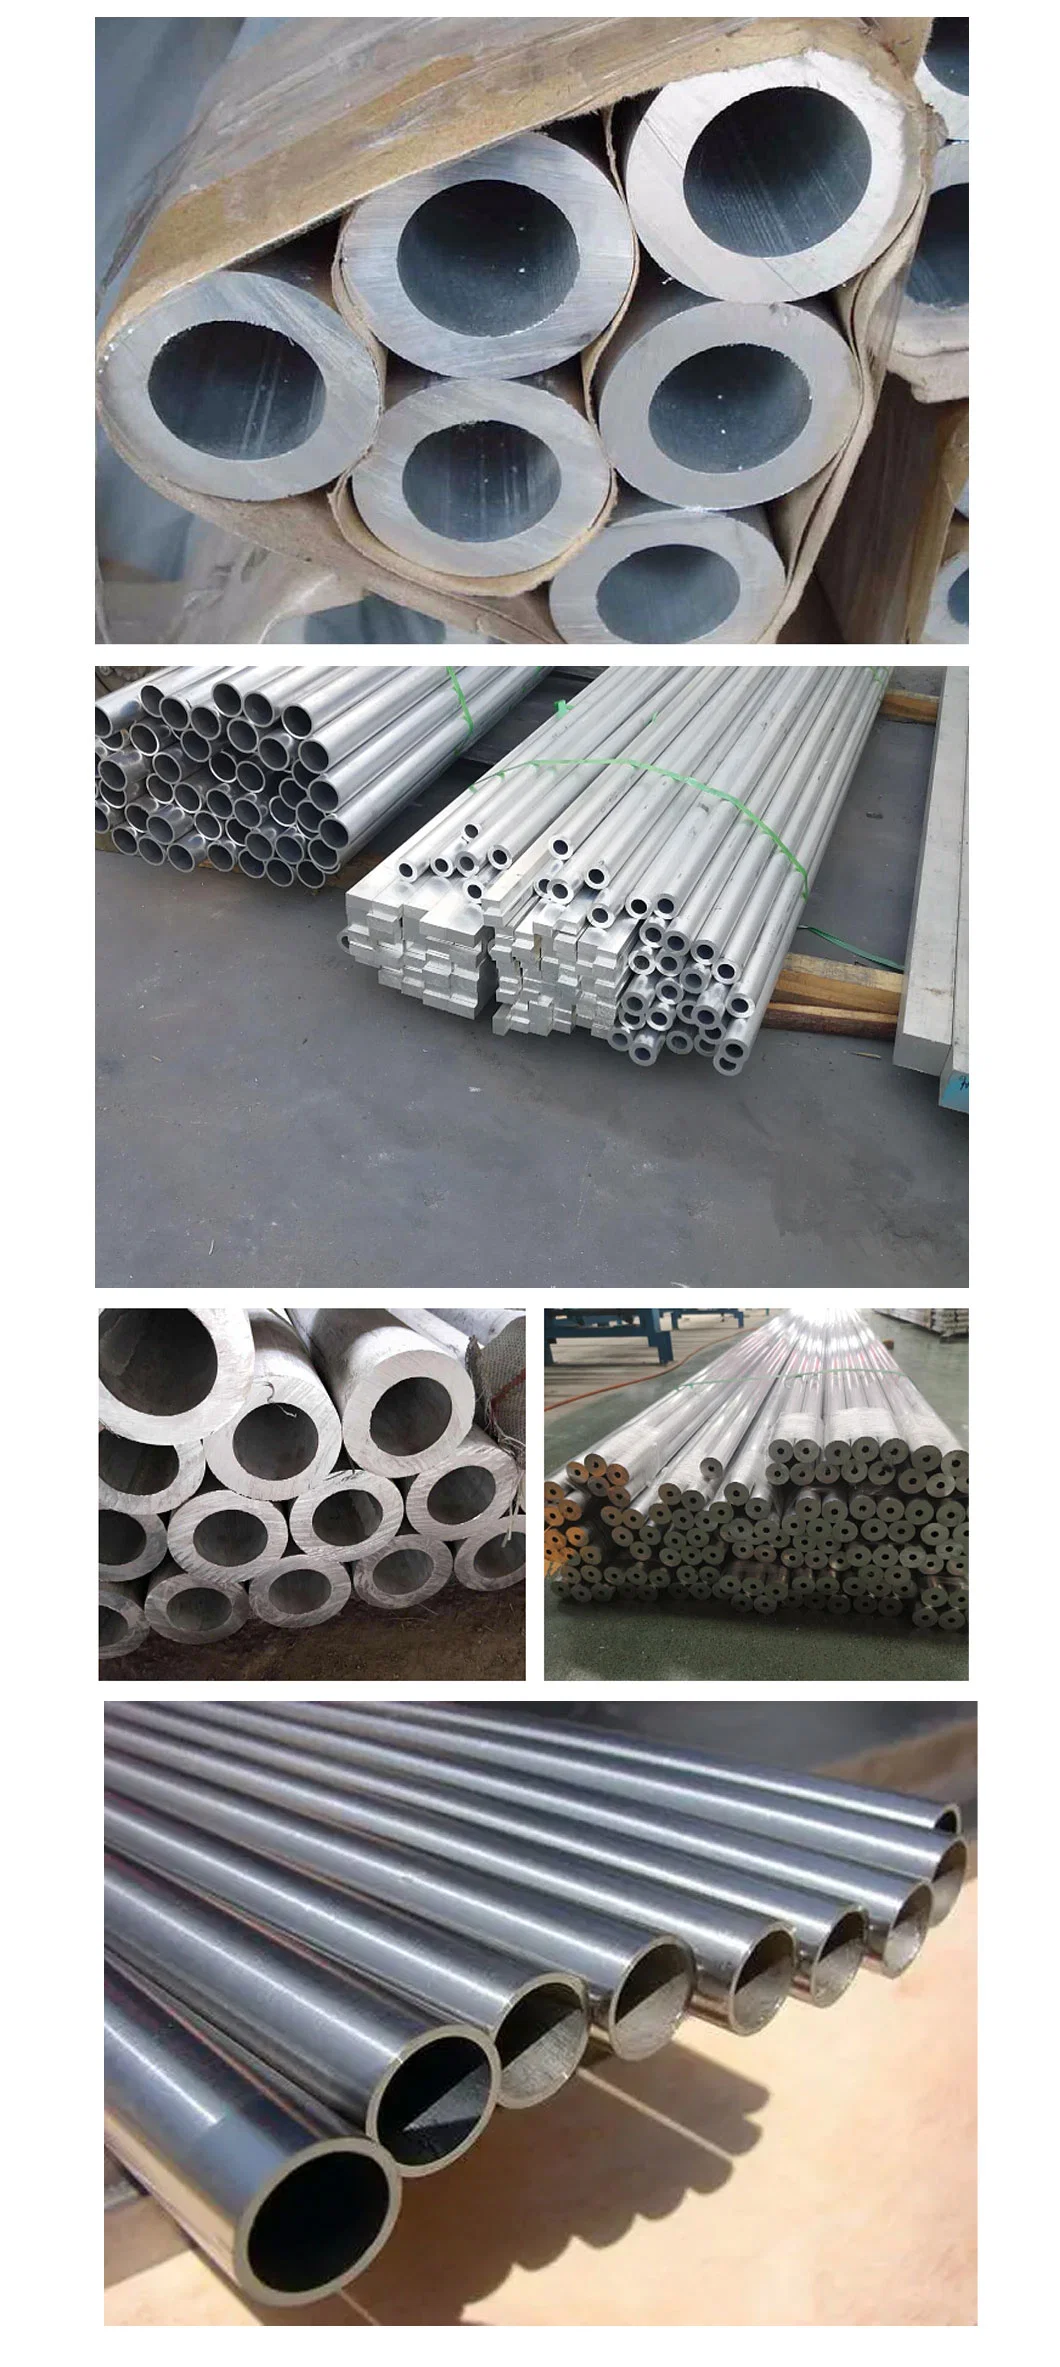 Corrosion Resistant Alloy ASTM B622, ASTM B167, ASTM B163, ASTM B444 Monel 400 Nickel Alloy Pipe/Tube